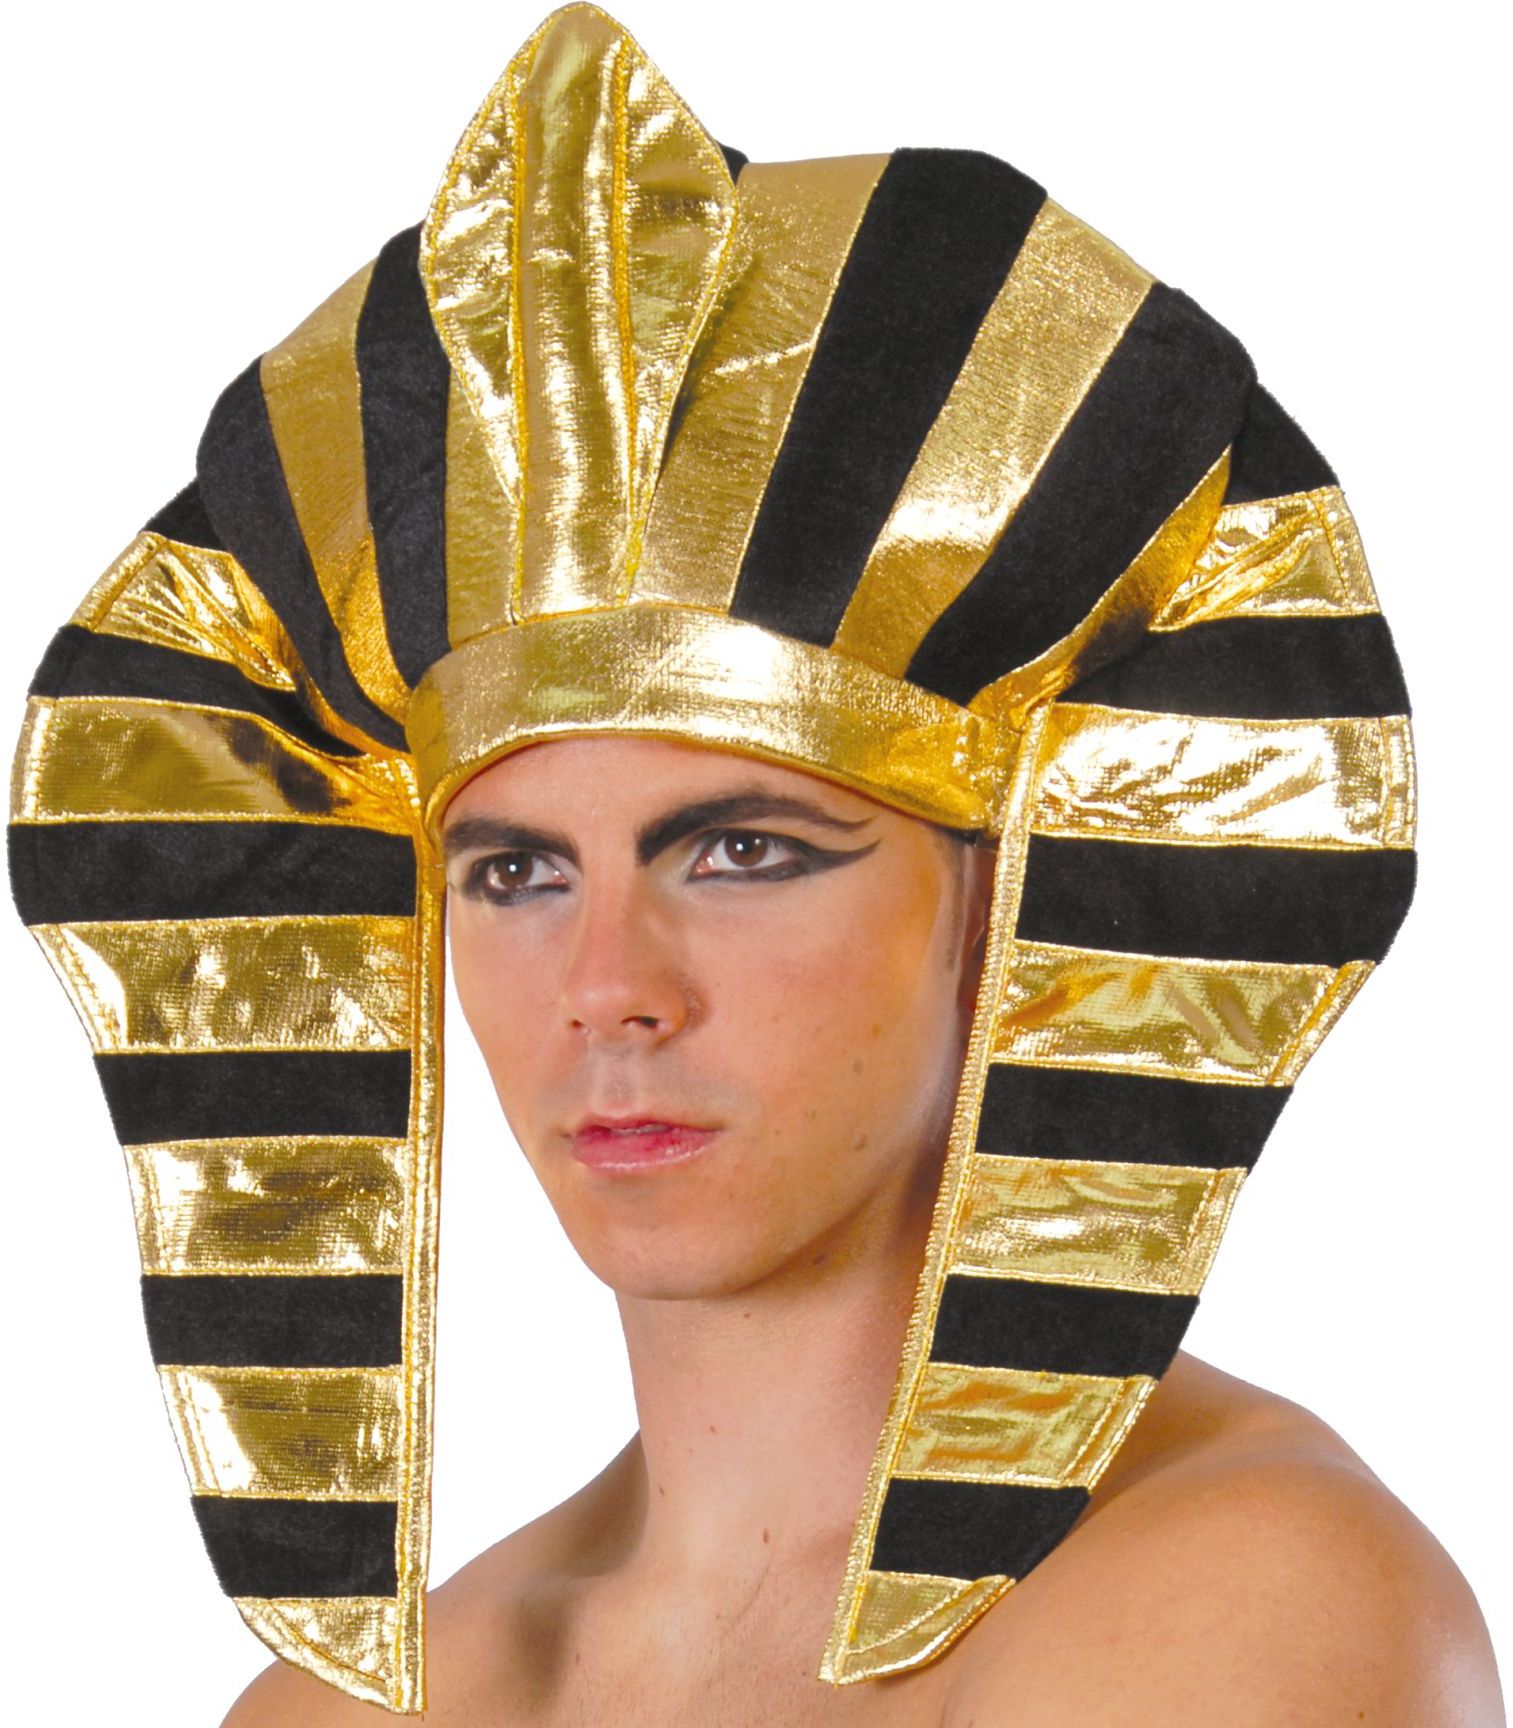 Gouden farao muts